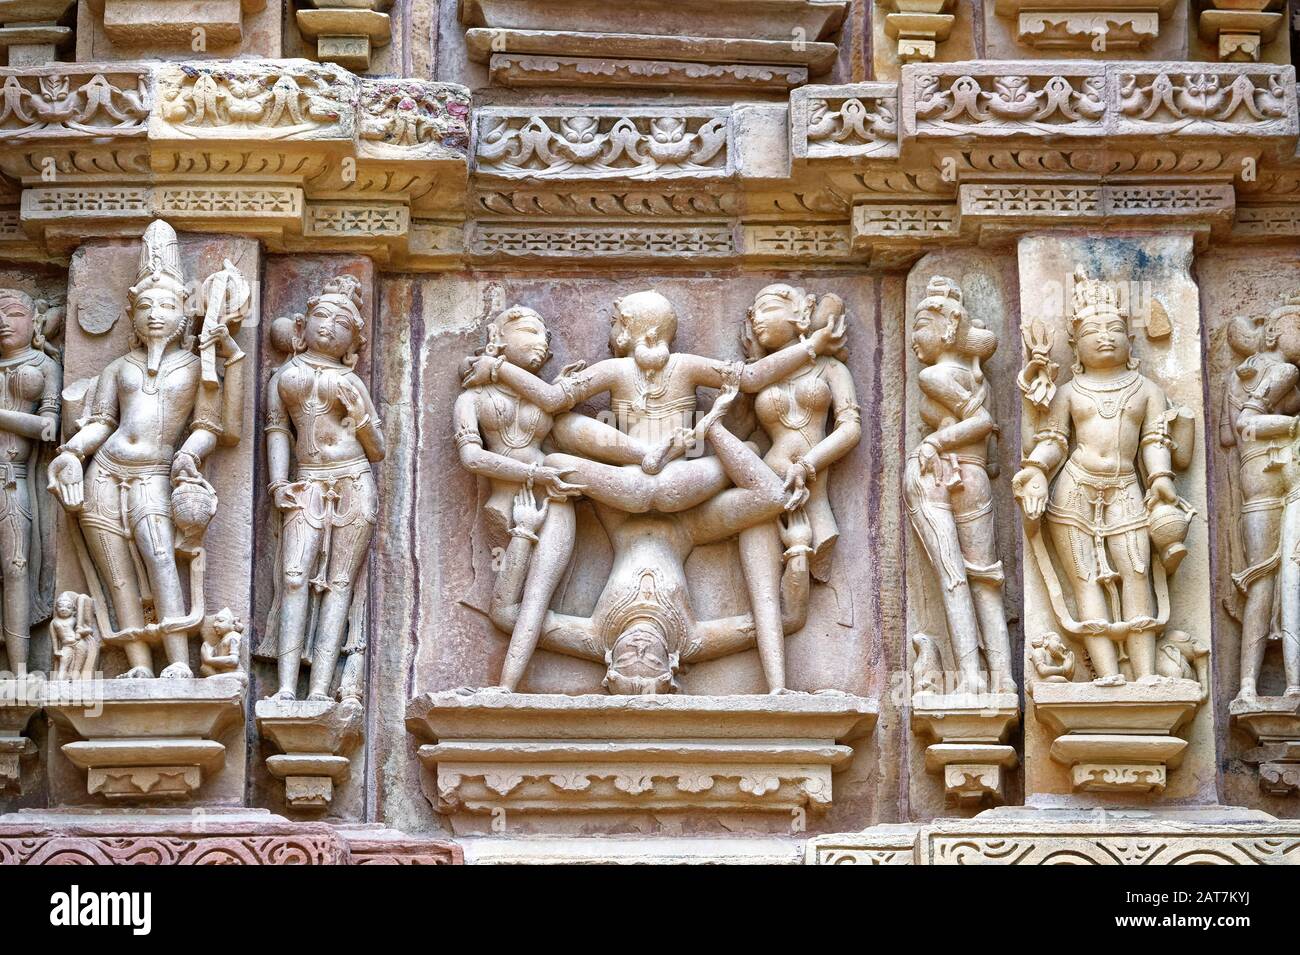 Sculptures on the walls of Kandariya Mahadeva Temple known as the Great God of the Cave, Khajuraho Group of Monuments, Madhya Pradesh state, India Stock Photo